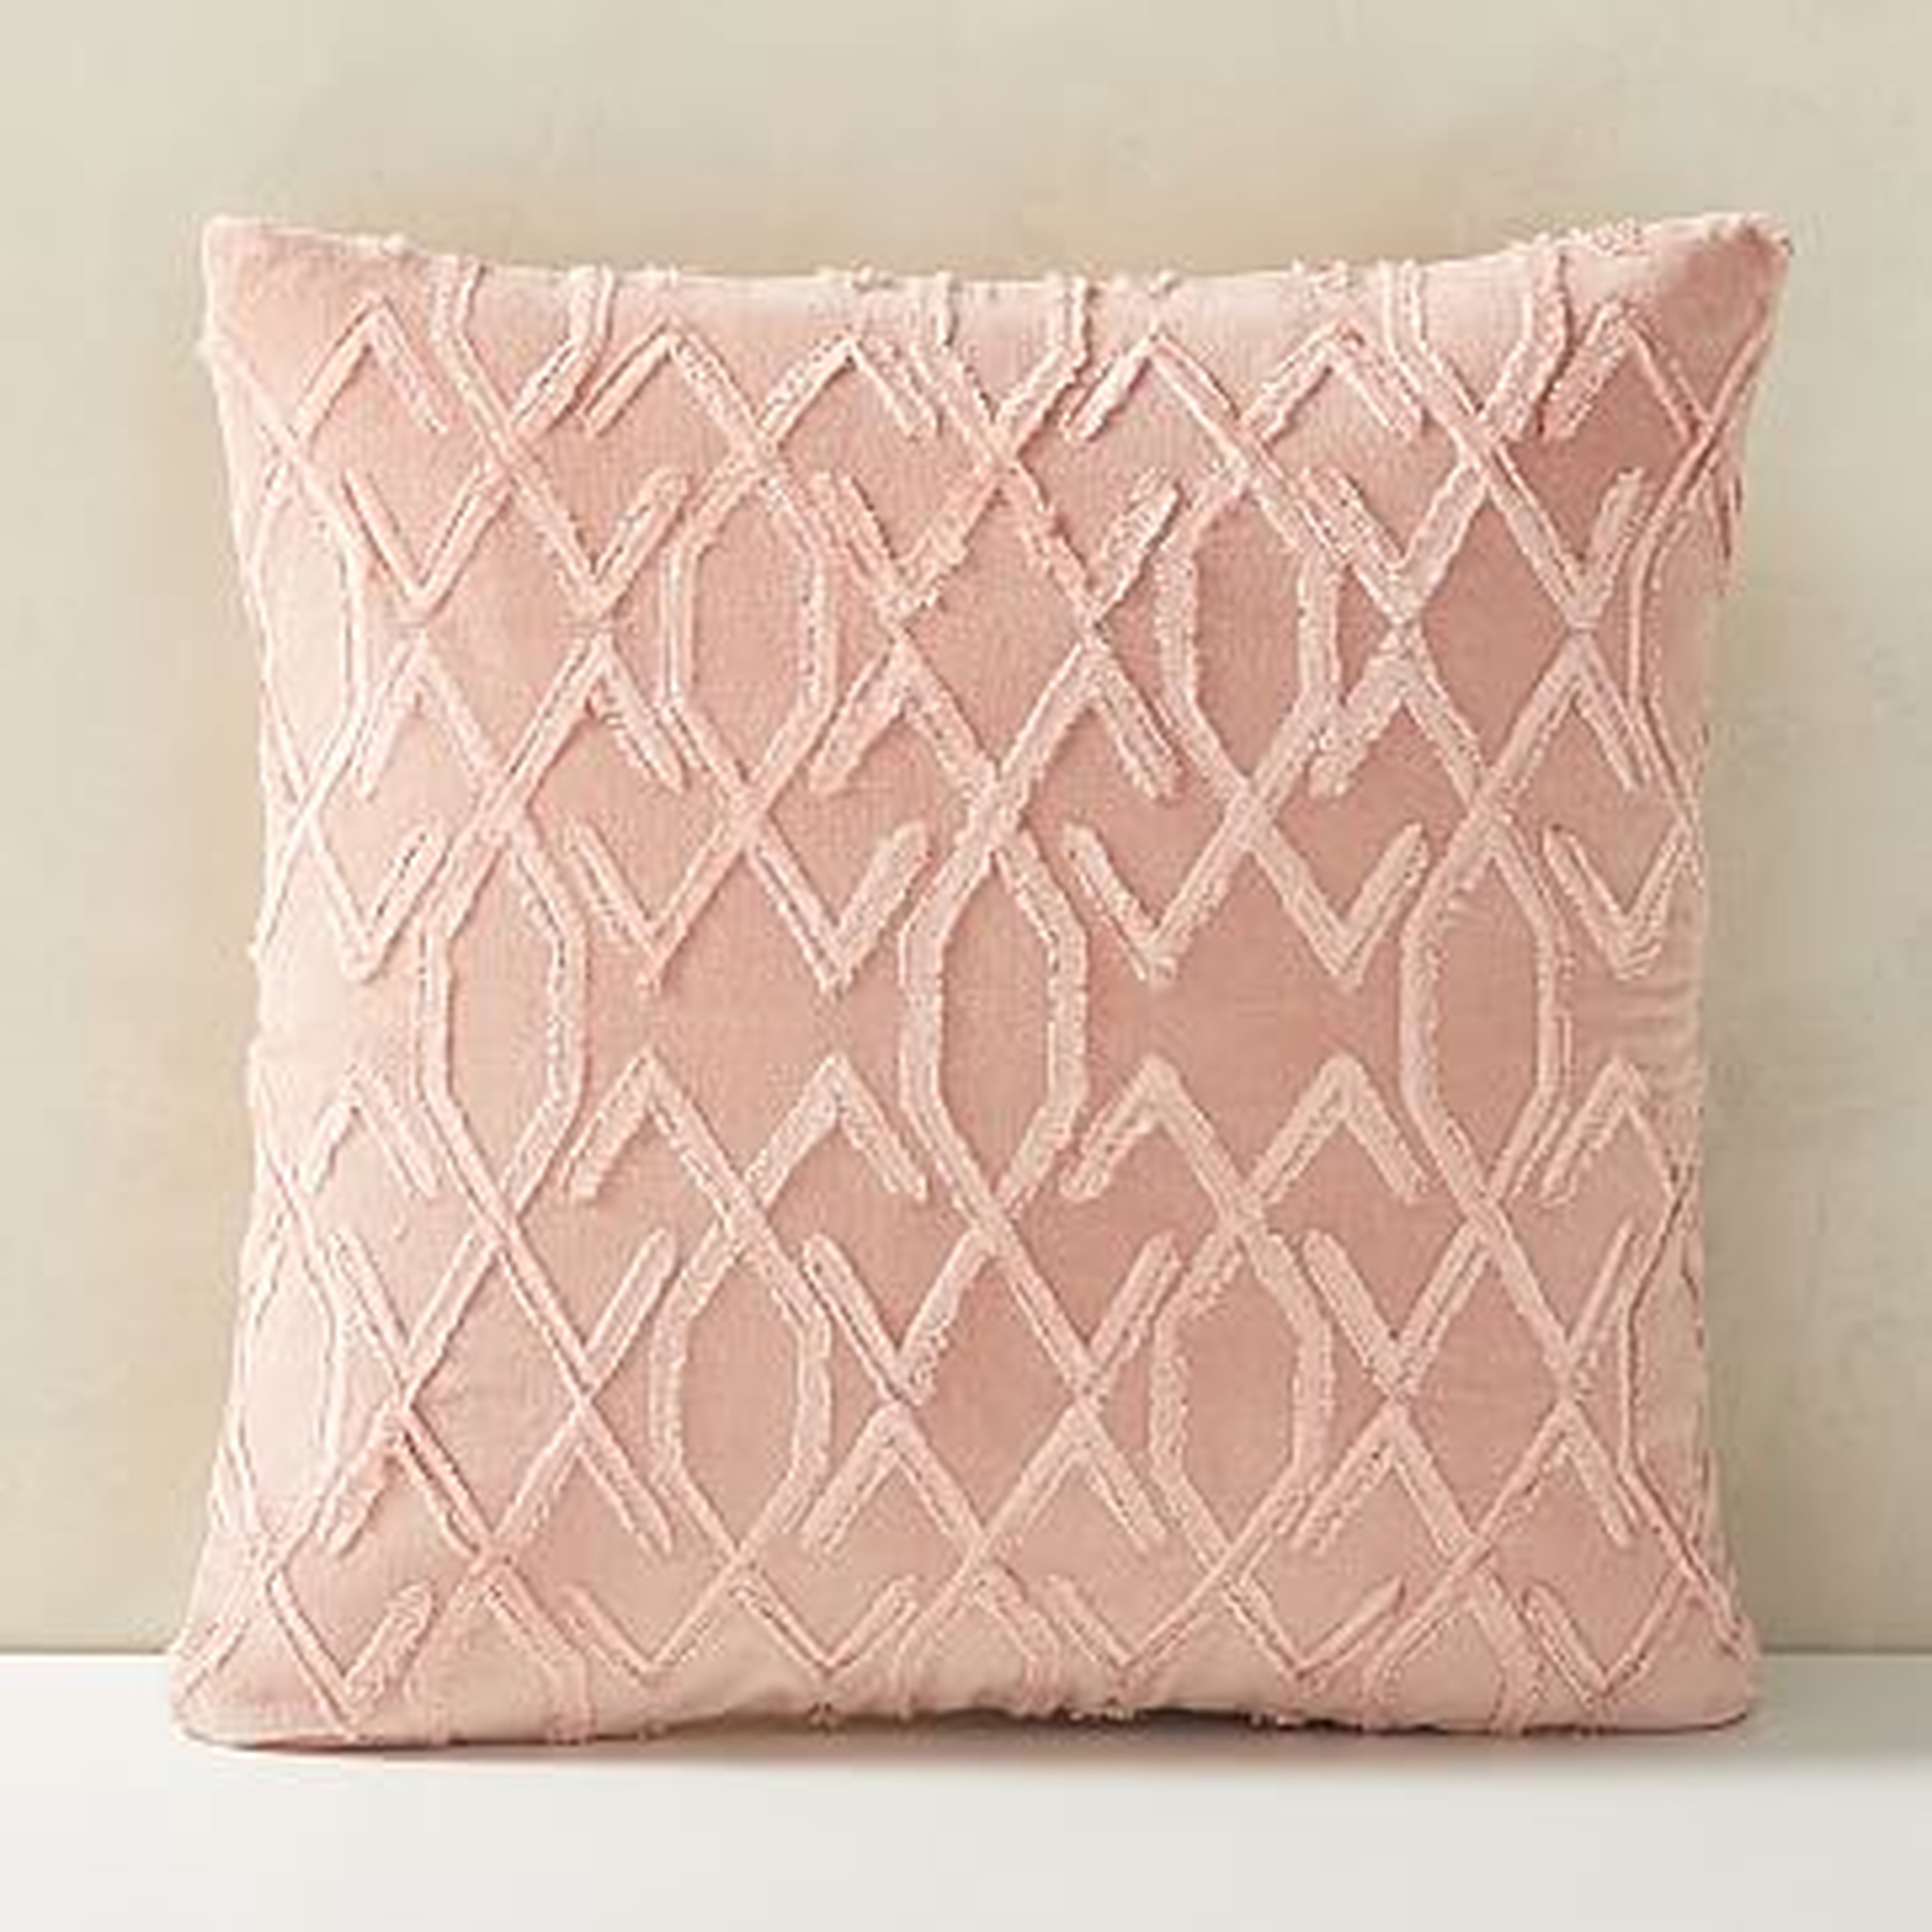 Cut Embroidery Velvet Pillow Cover, 18"x18", Dusty Blush - West Elm